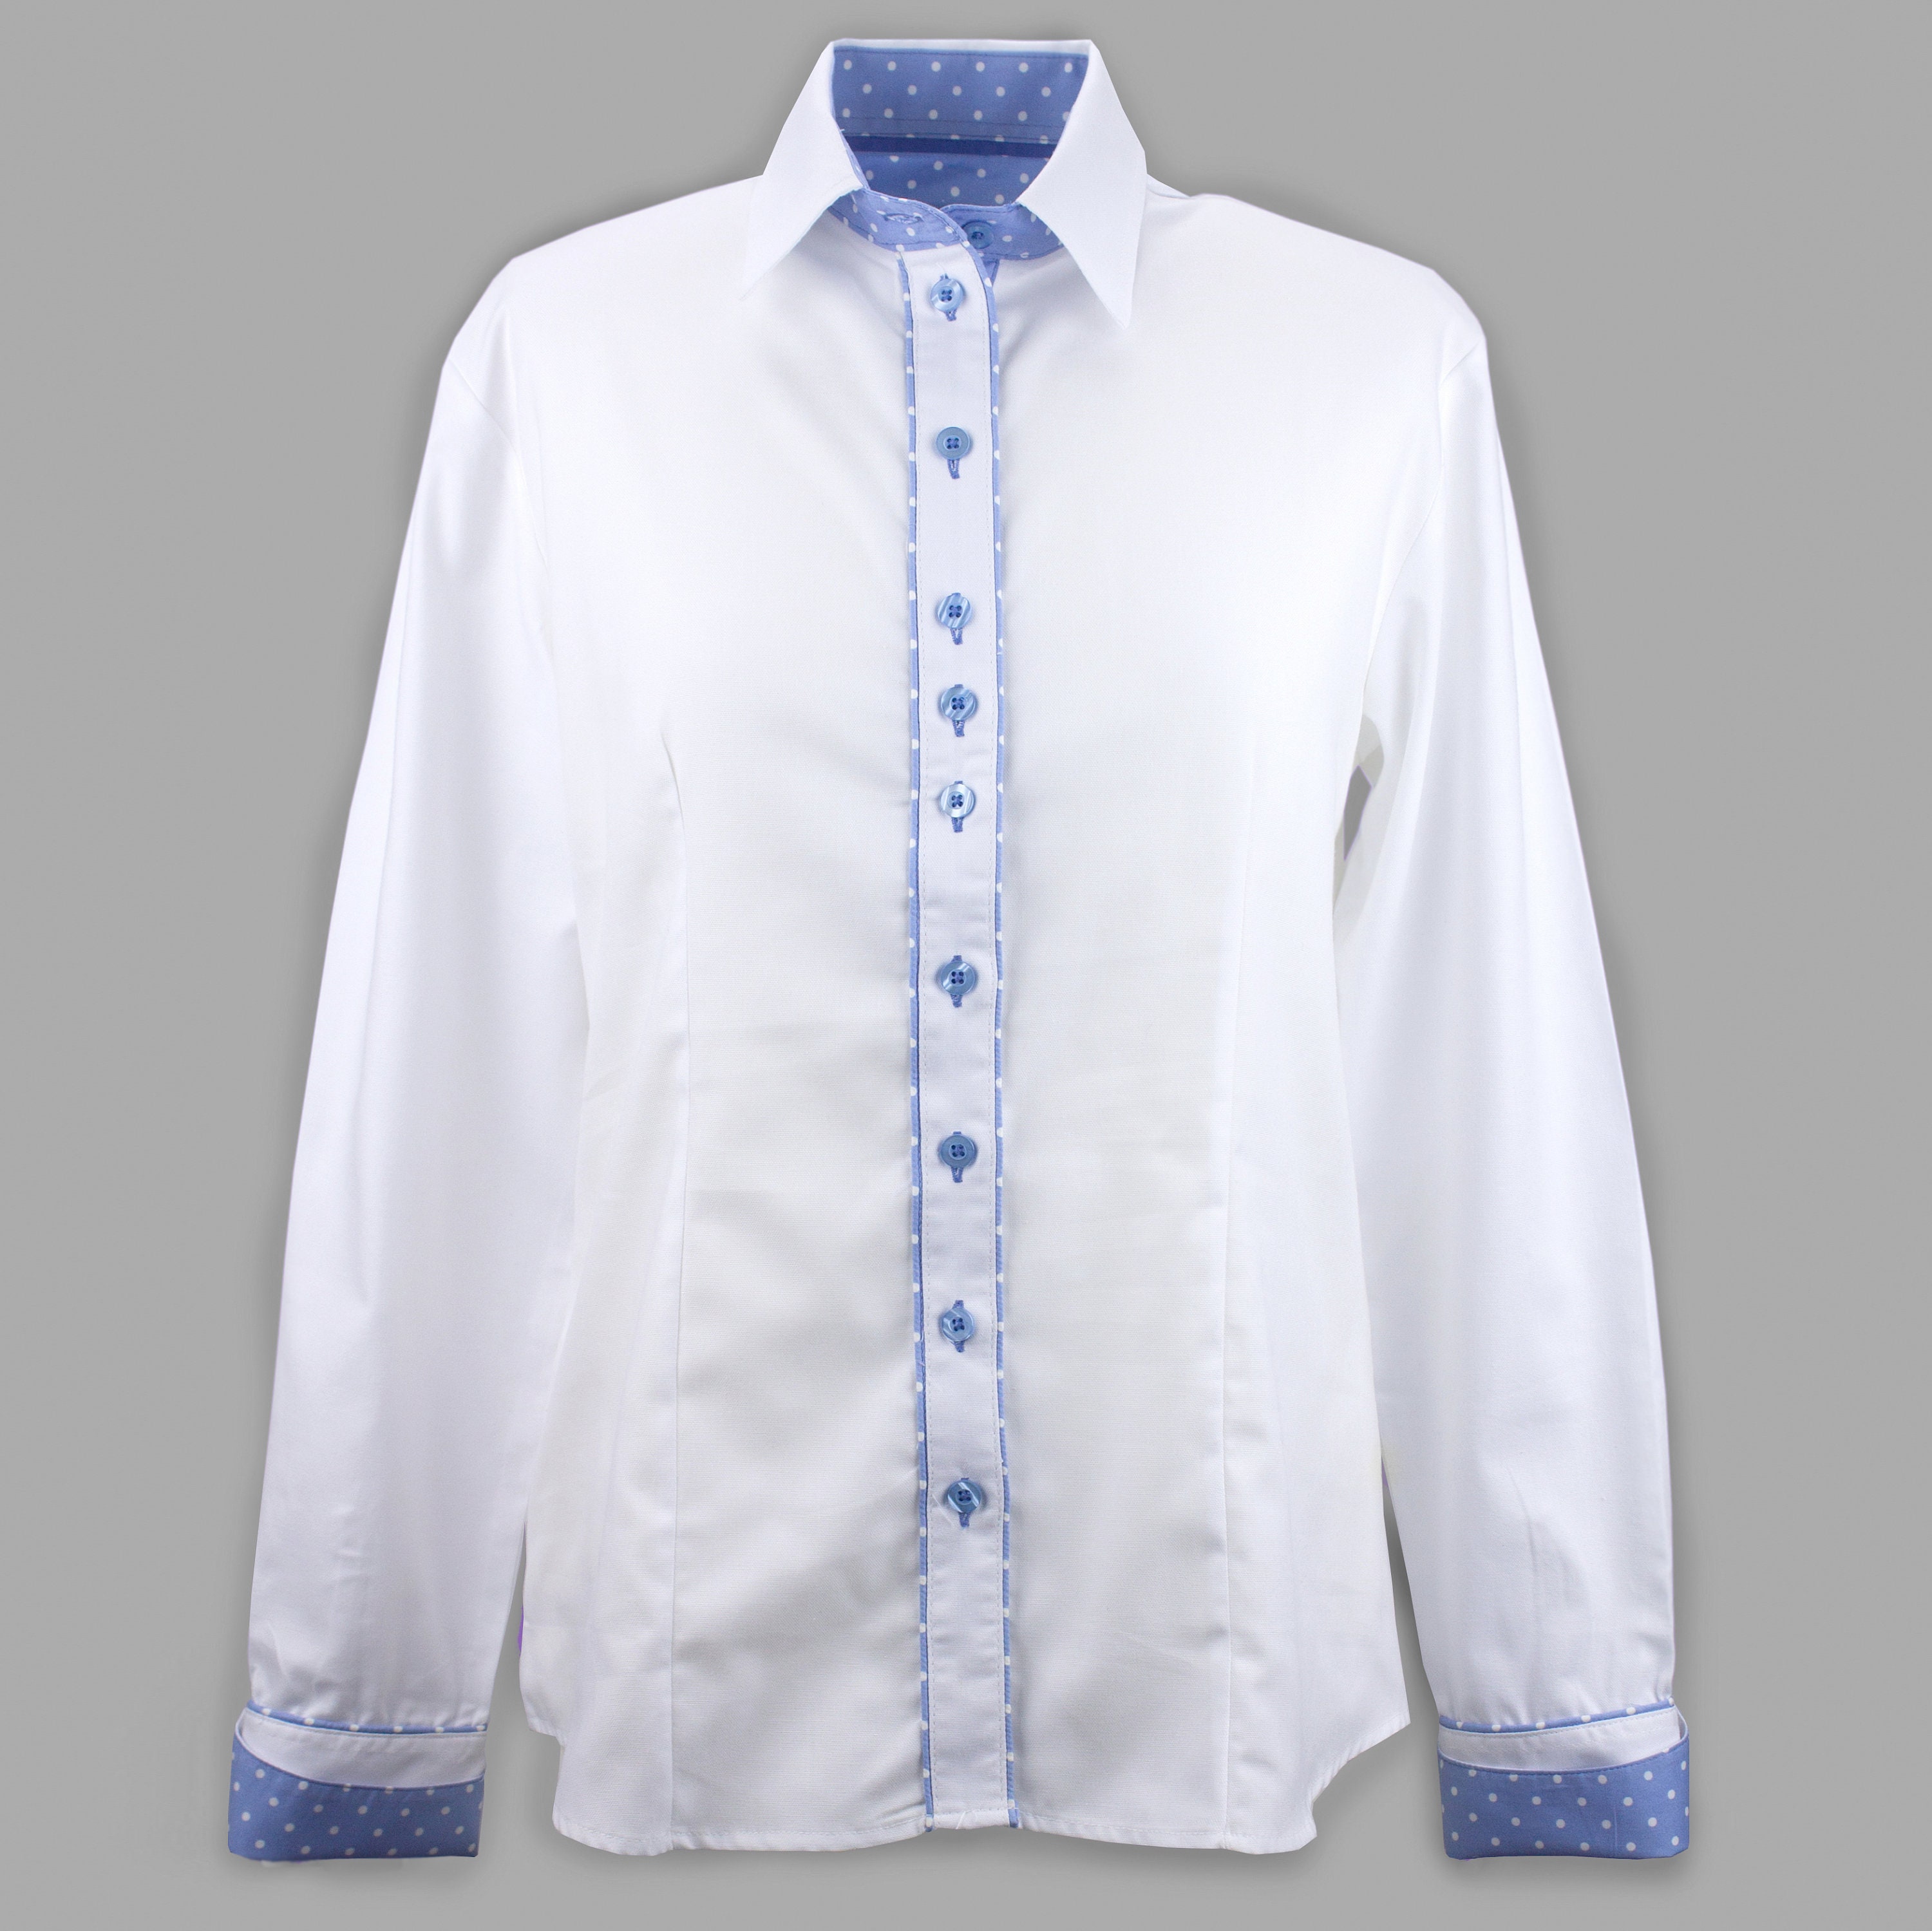 Ladies Long Sleeve White Blouse With Blue and White Polka Dot - Etsy UK